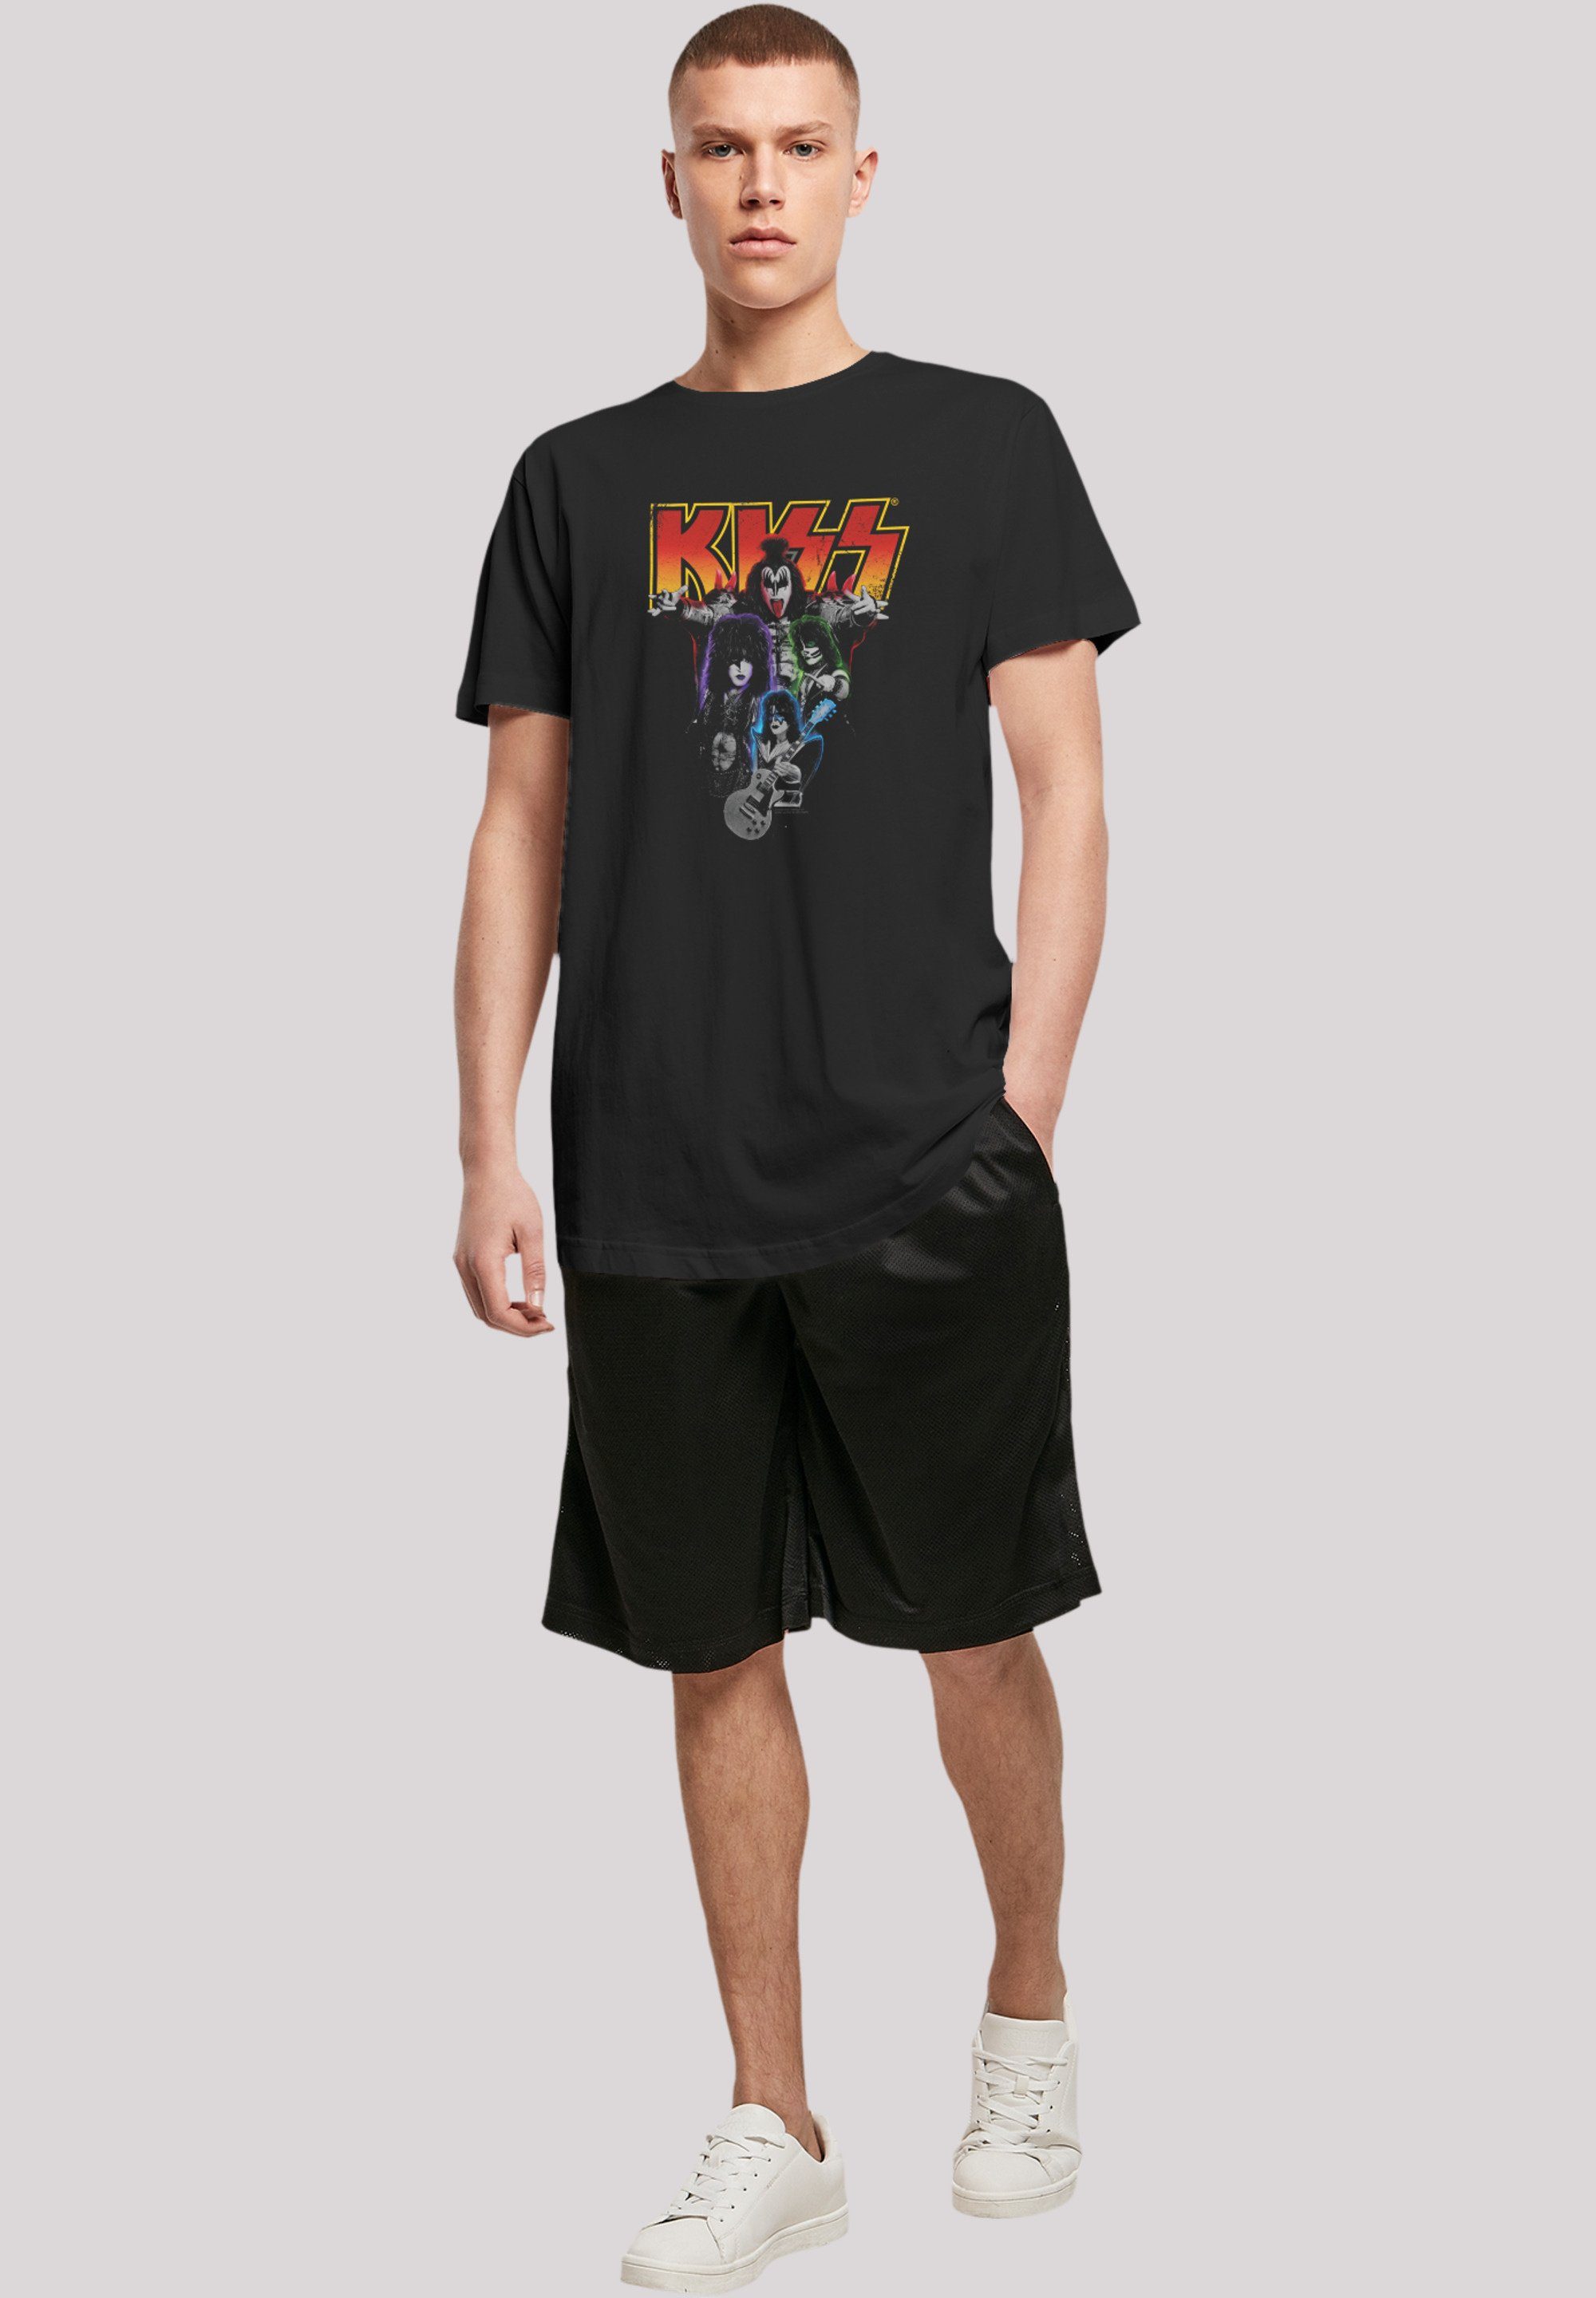 F4NT4STIC T-Shirt Kiss Band Rock Rock Qualität, By Premium Off Musik, Neon